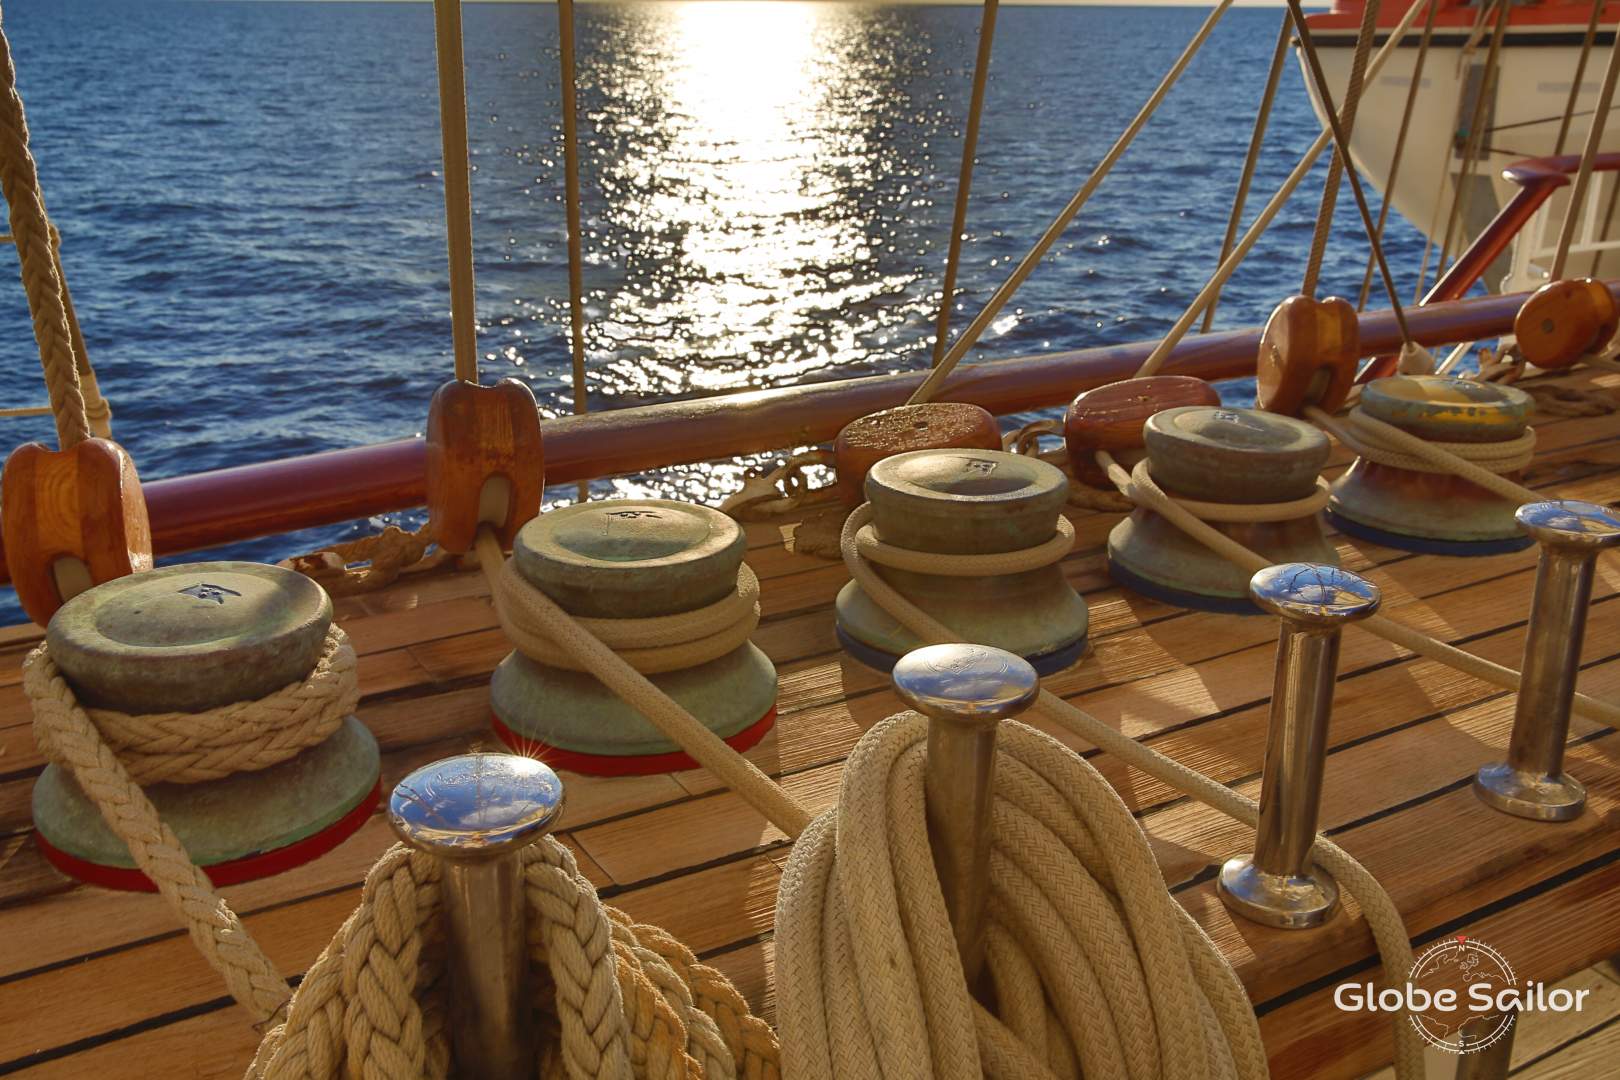 Ready to help the crew hoist all 42 sails?